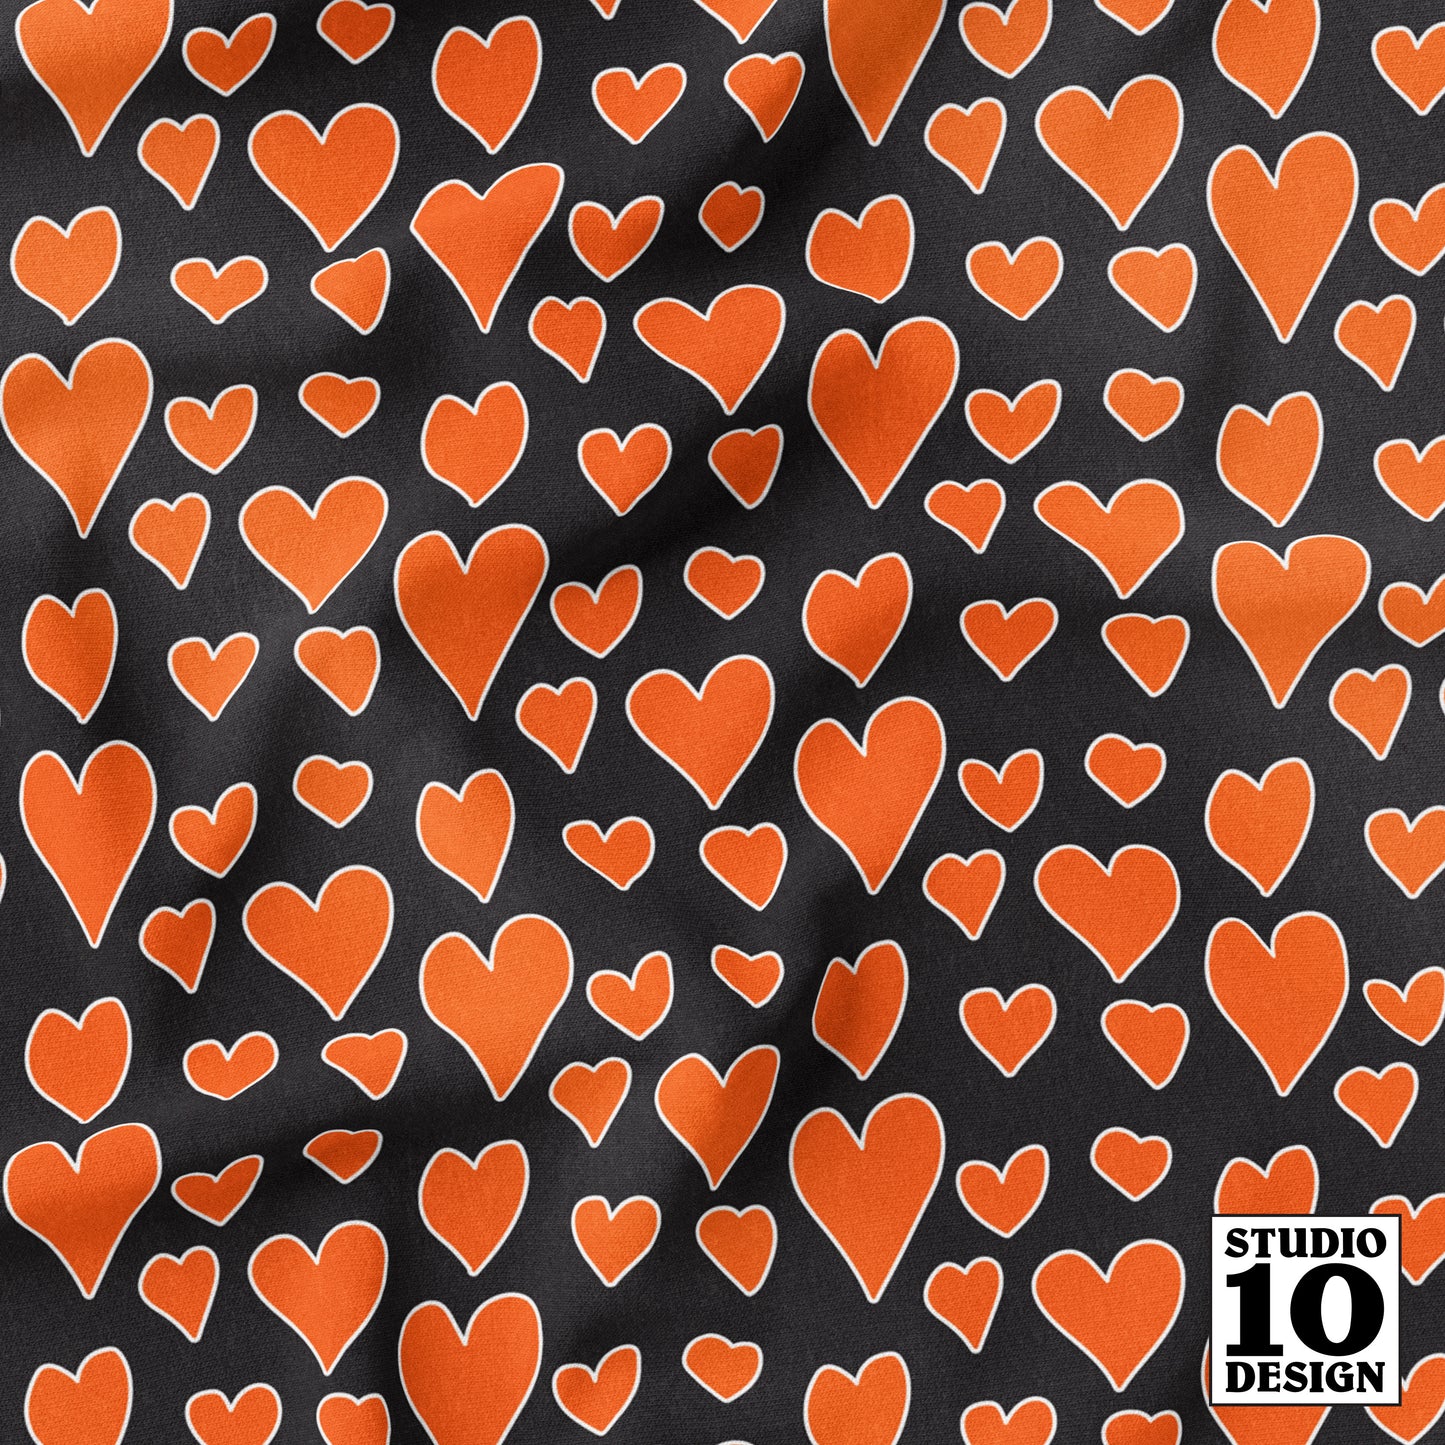 Rainbow Hearts Orange+Black Printed Fabric by Studio Ten Design